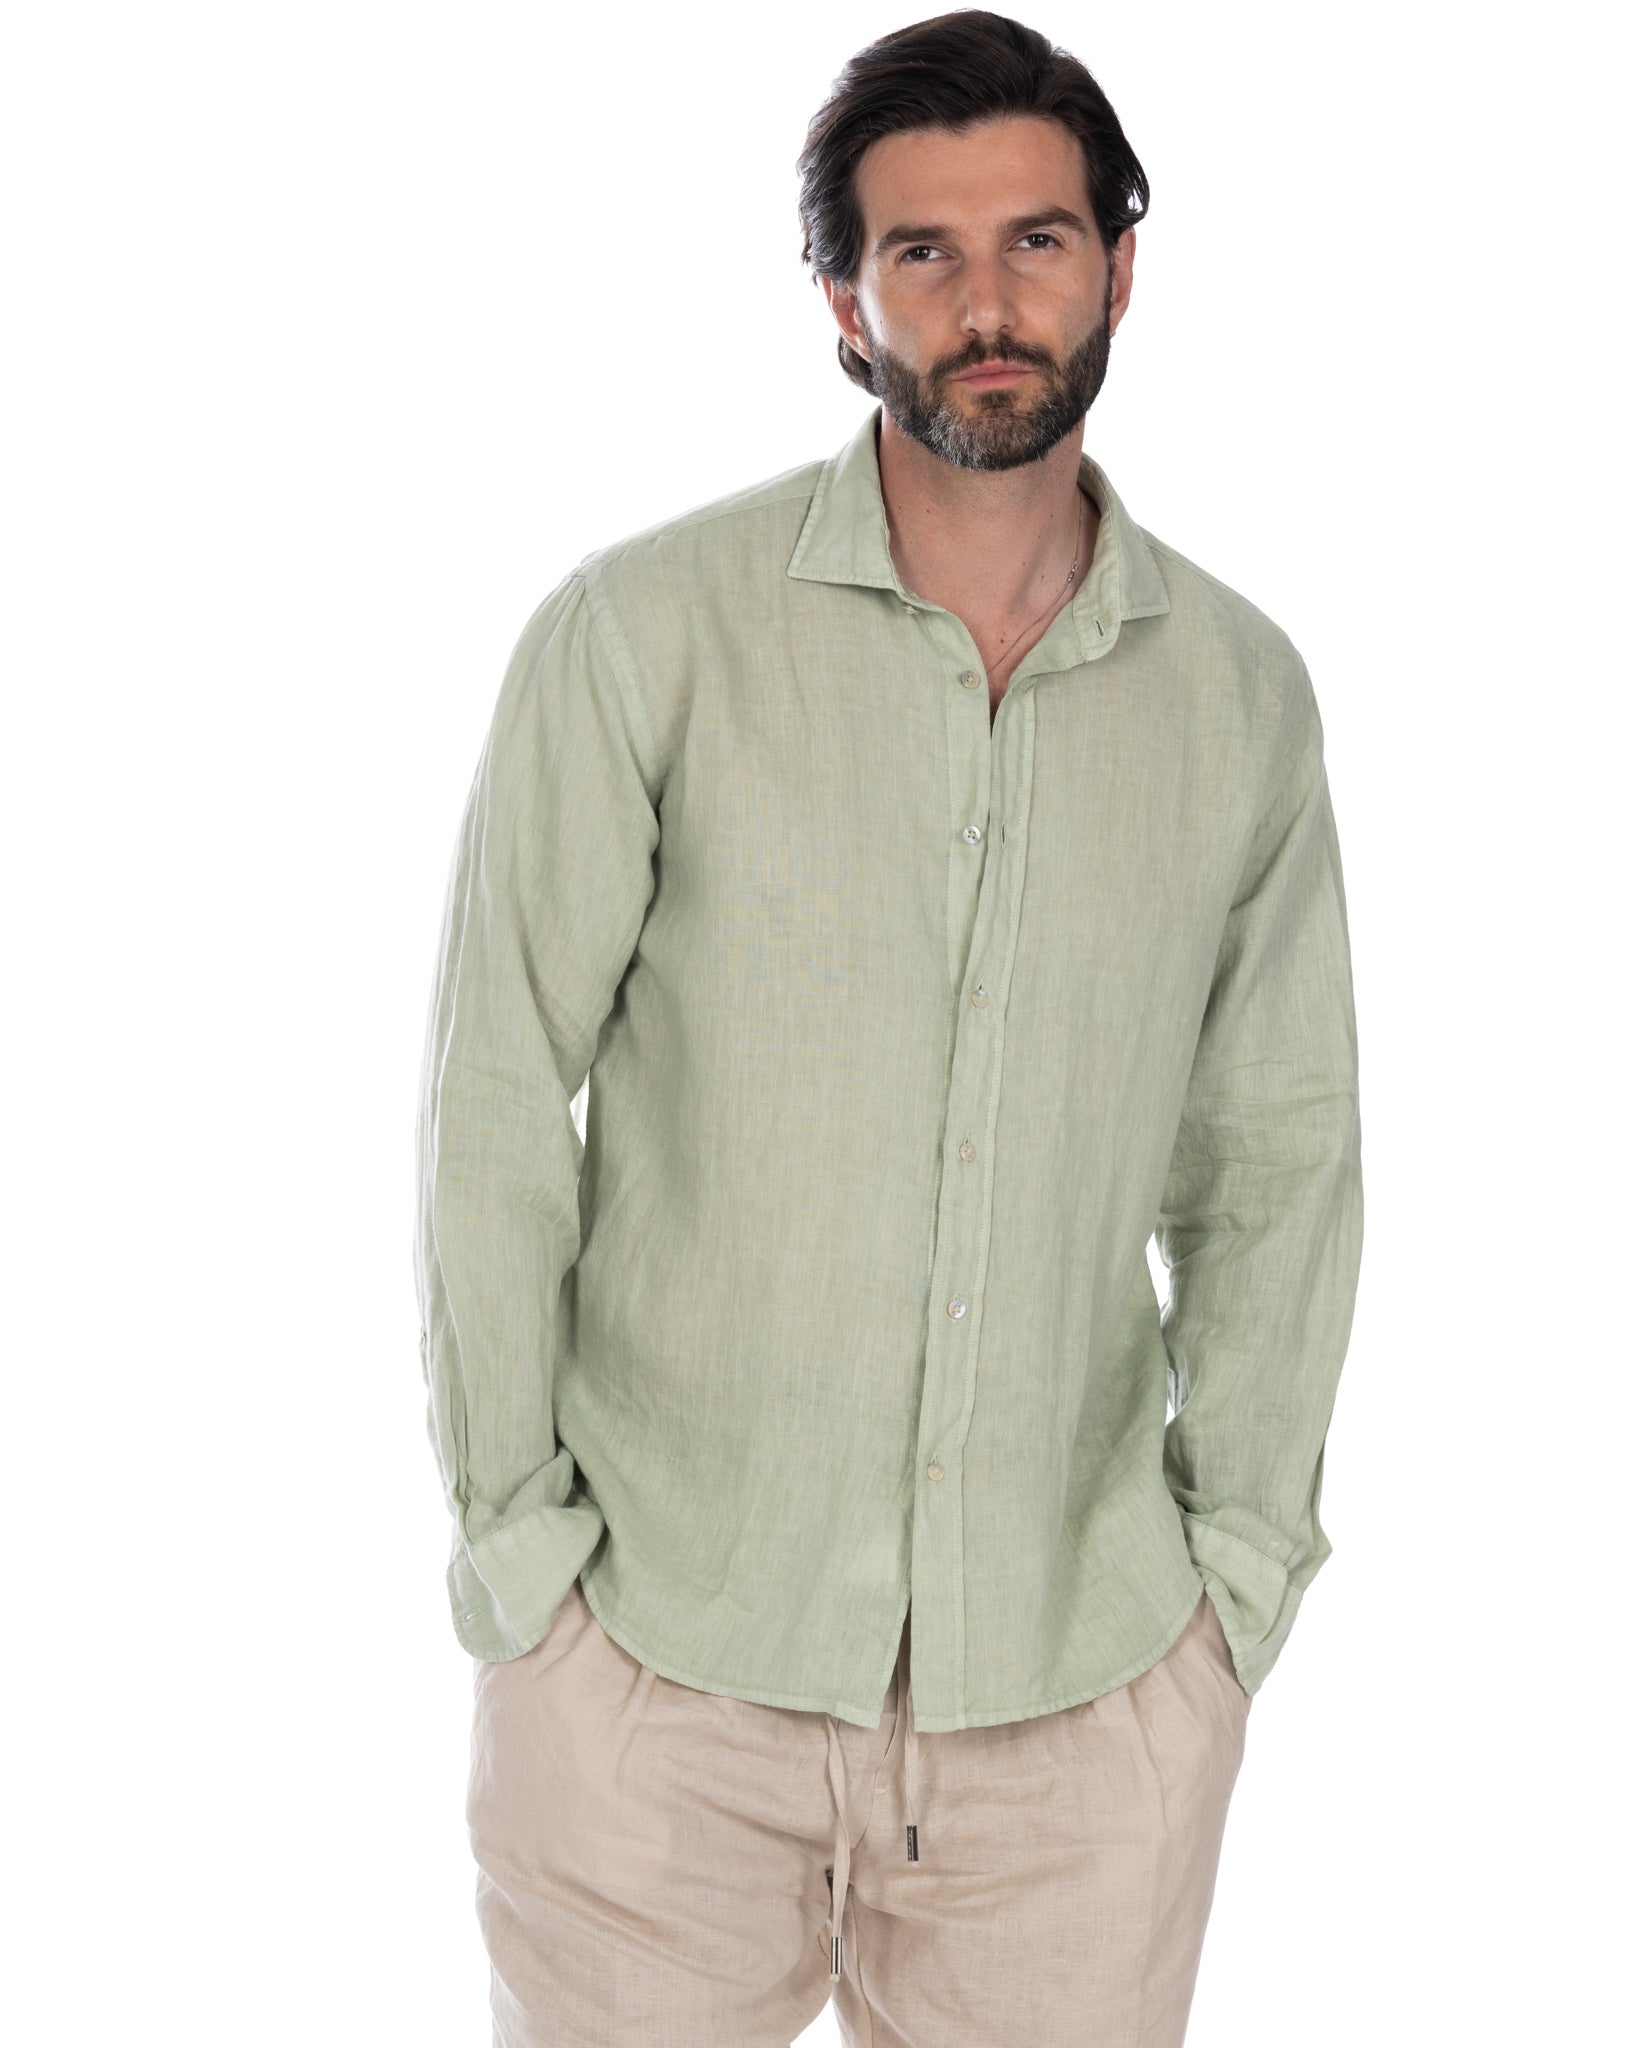 Montecarlo - green pure linen shirt